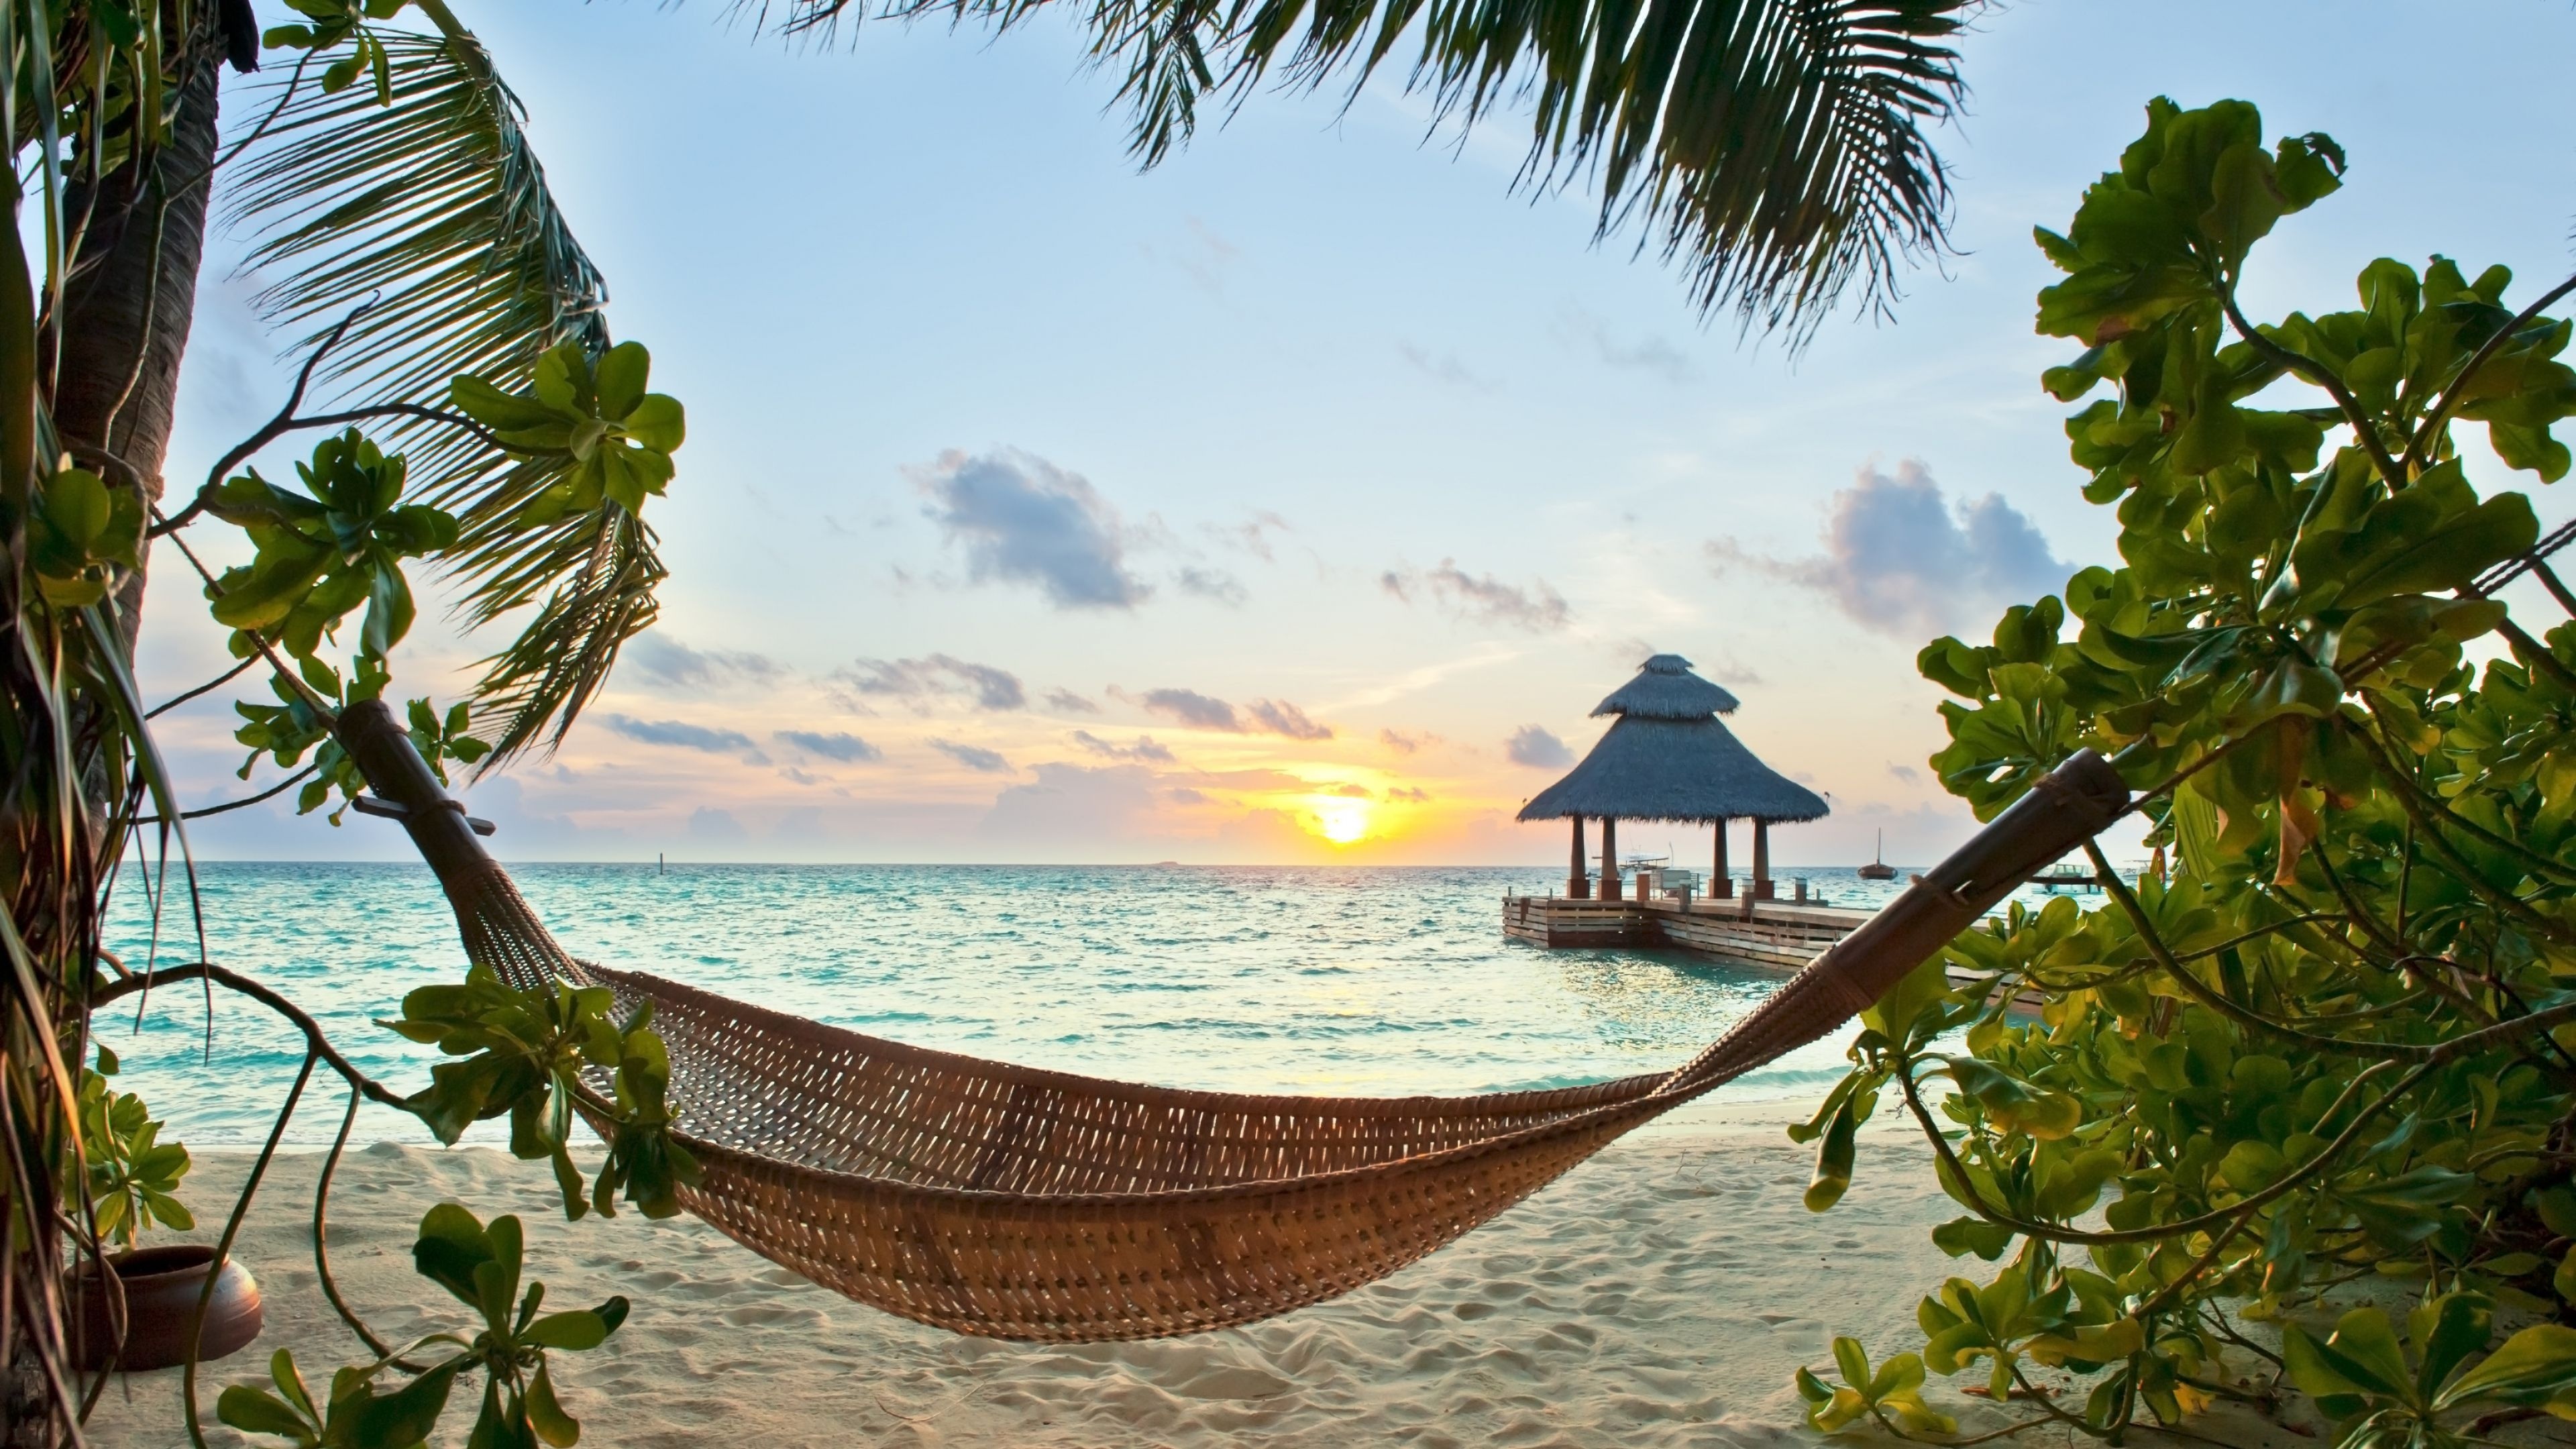 4K Ultra HD beach wallpapers, Tranquil shores, Relaxing hammock, Beautiful coastal scenery, 3840x2160 4K Desktop